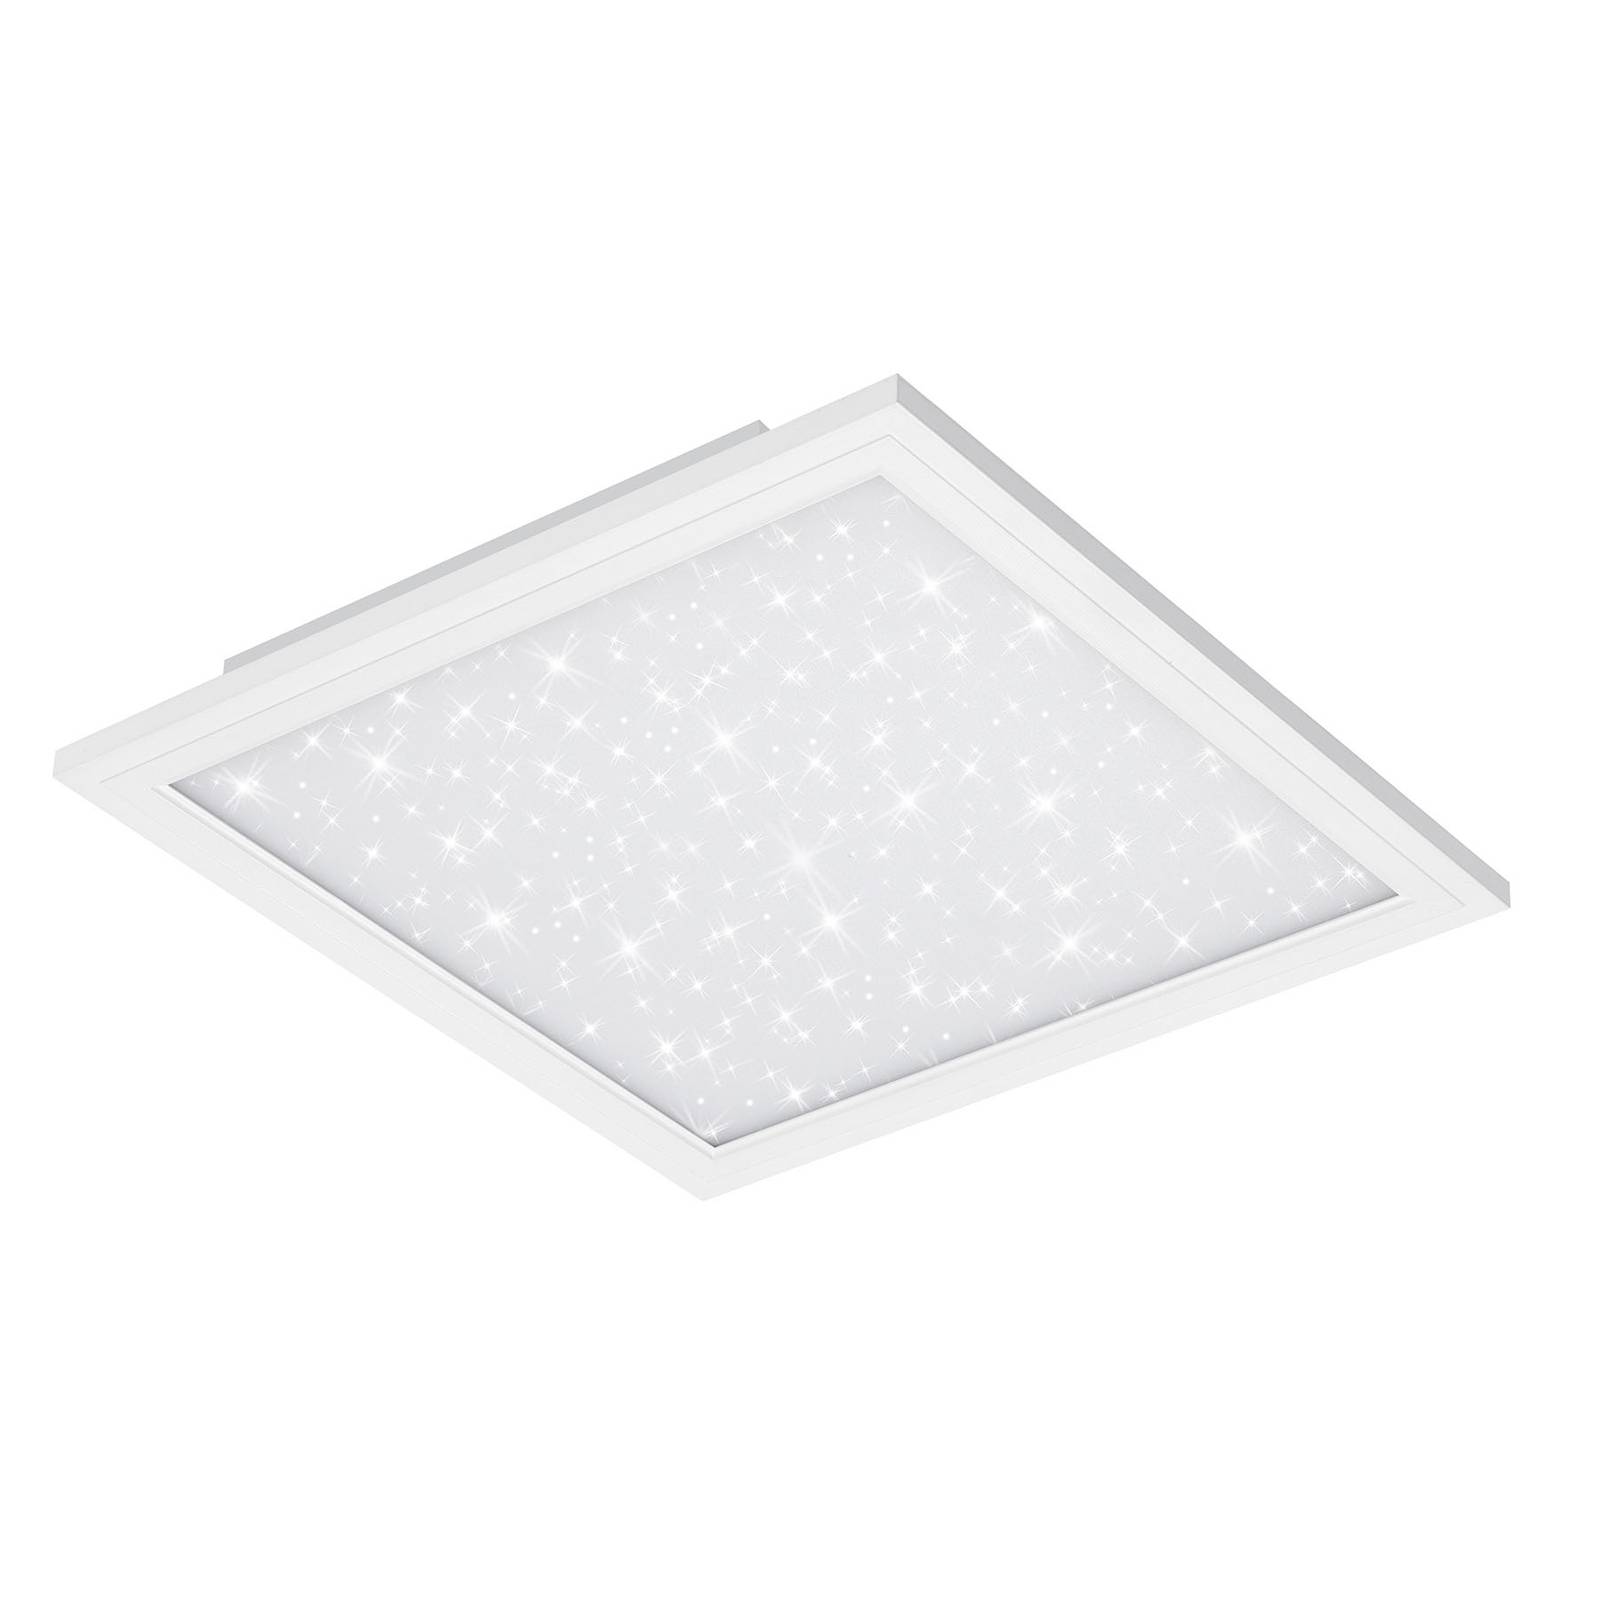 Briloner LED-Panel Sternenhimmel 7390, 29 x 29 cm